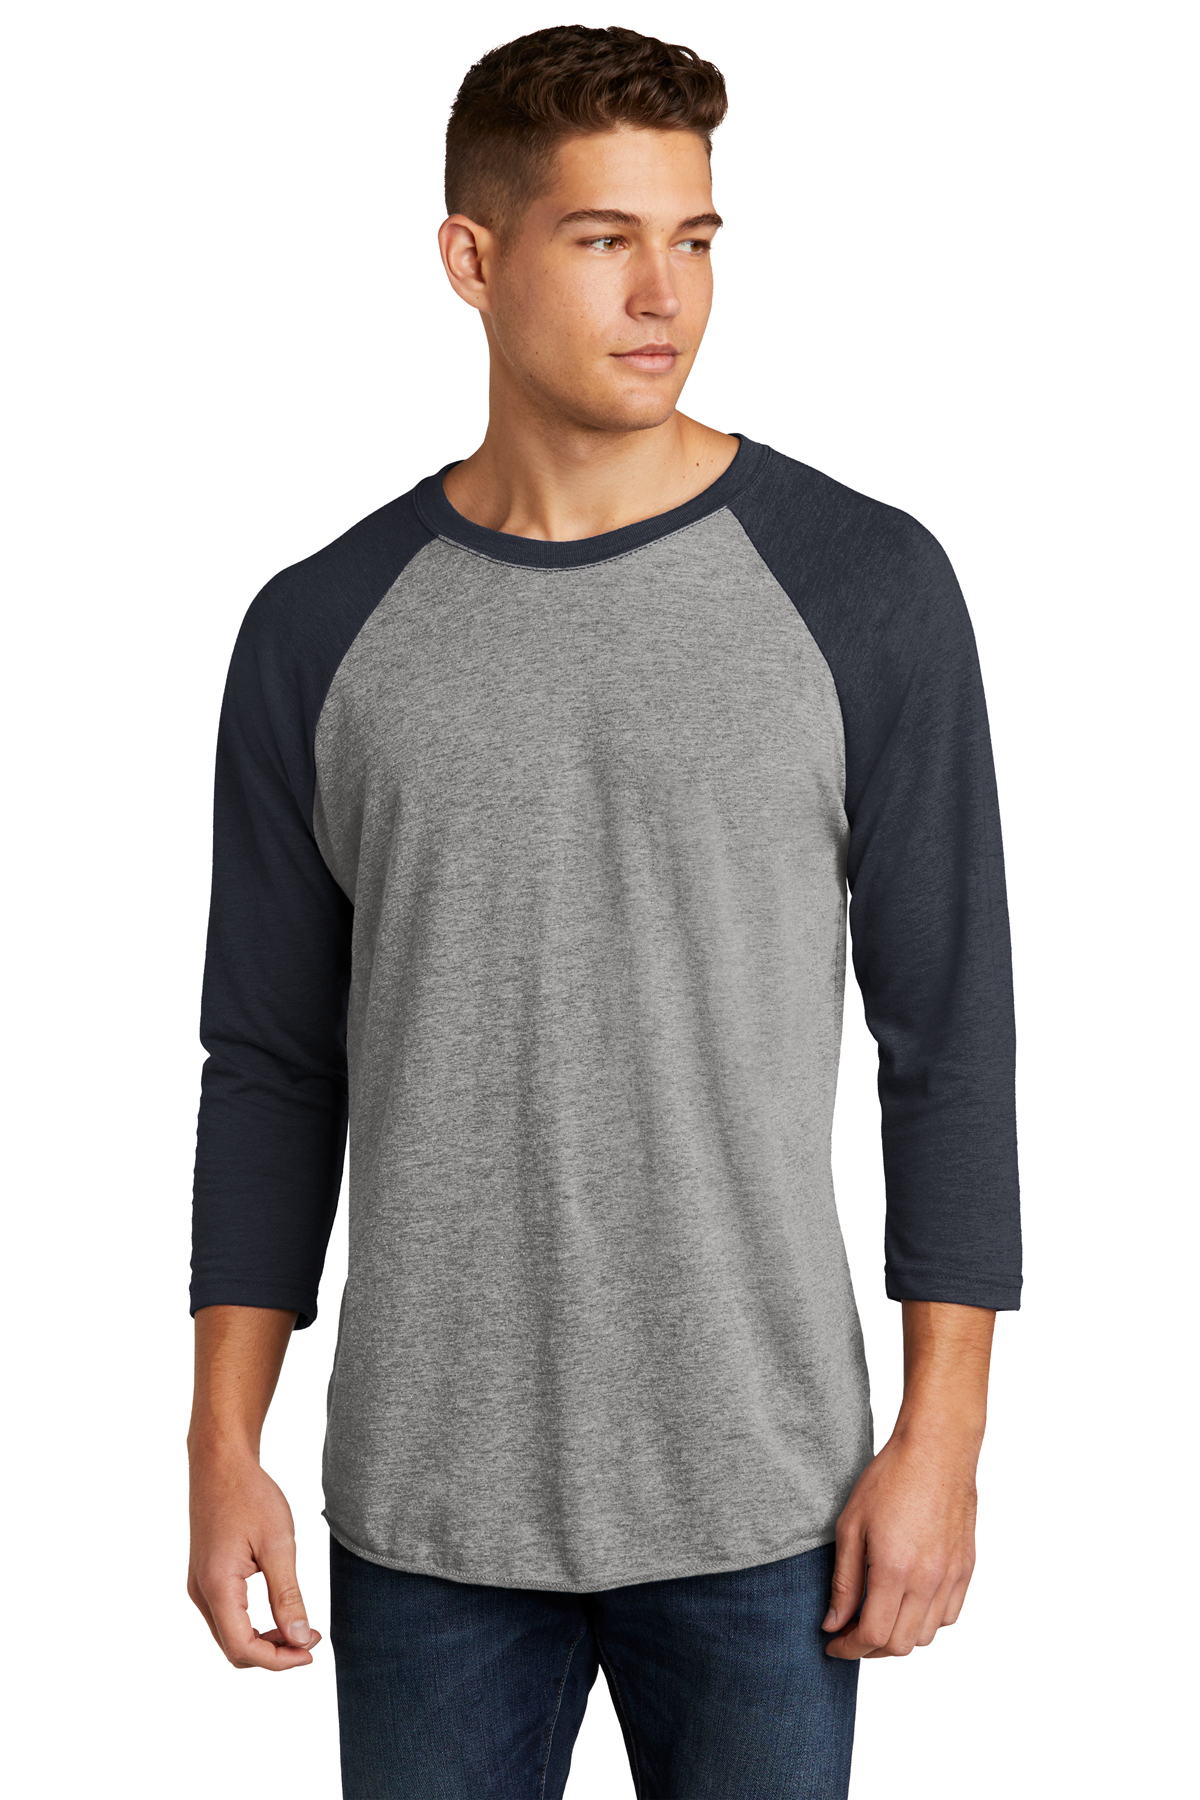 Next Level Unisex 3/4-Sleeve Raglan T-Shirt 